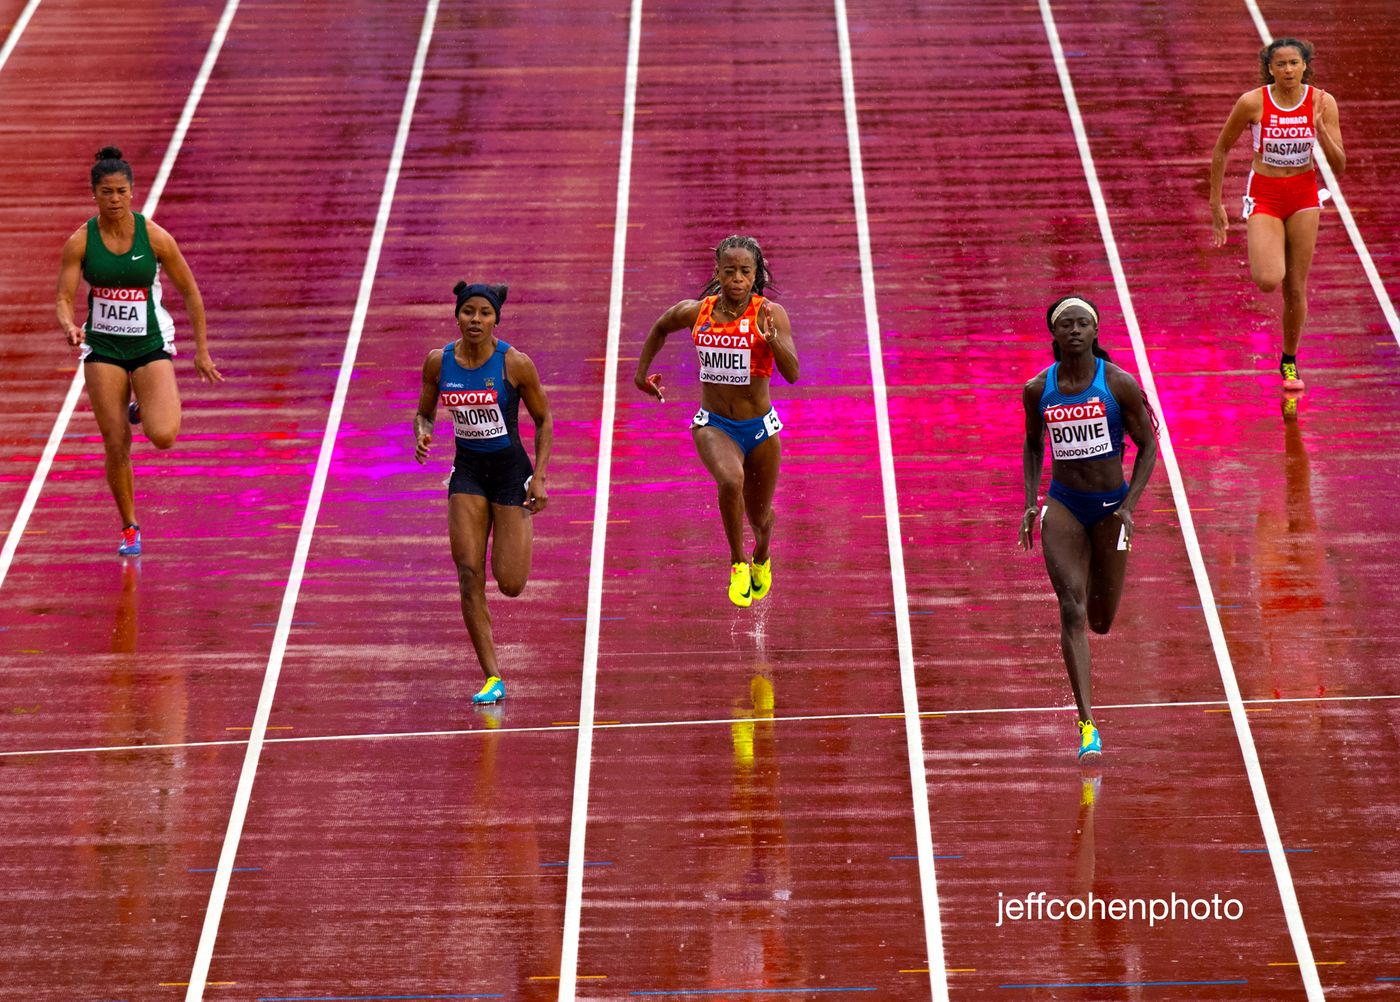 2017-IAAF-WC-London-day-2-100w-color-jeff-cohen-photo--4730-web.jpg